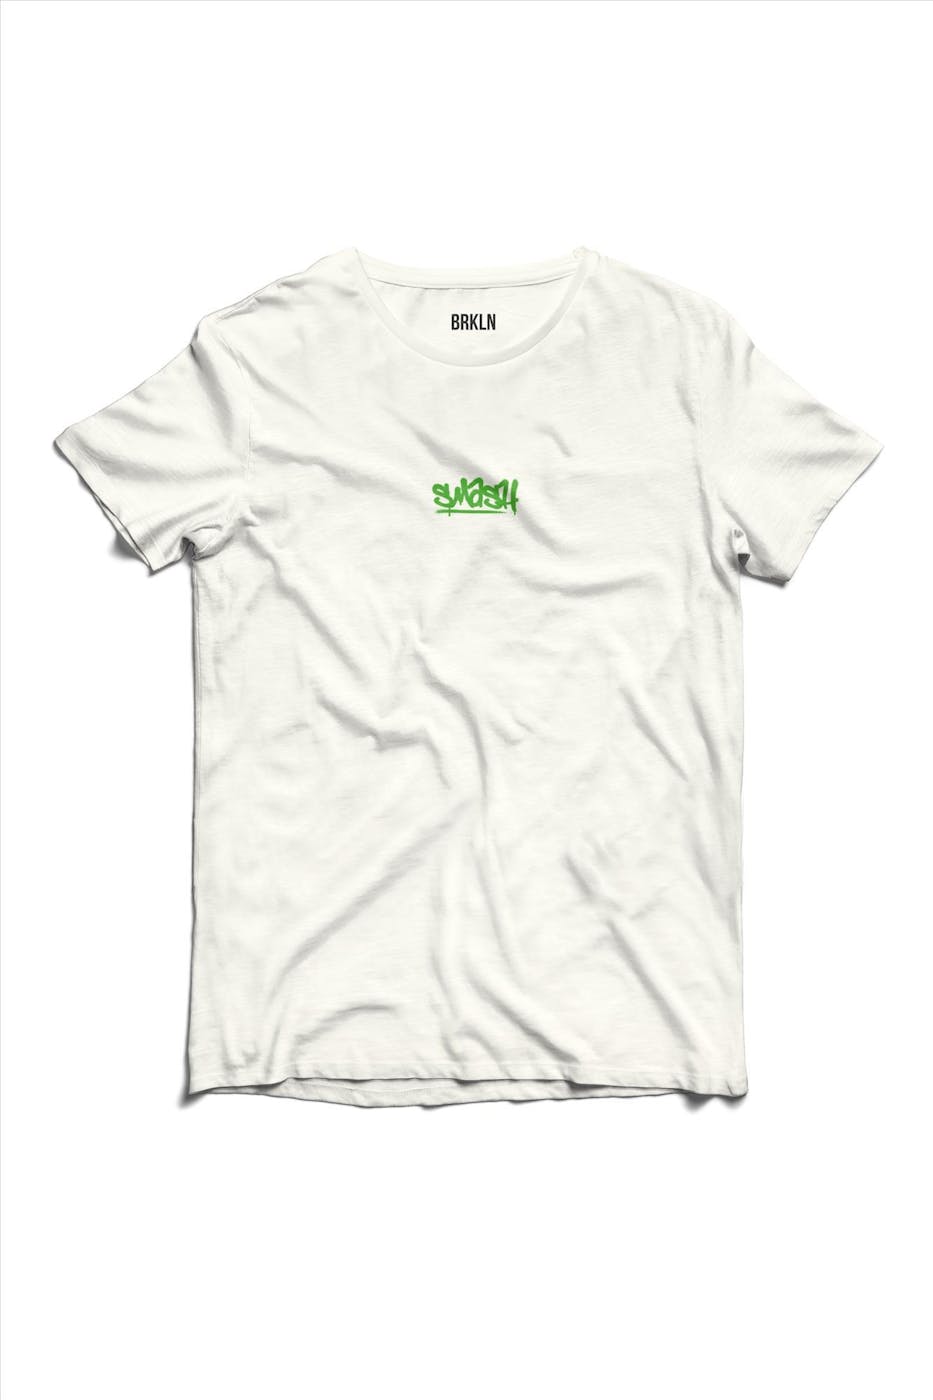 Brooklyn - Ecru Smash T-shirt